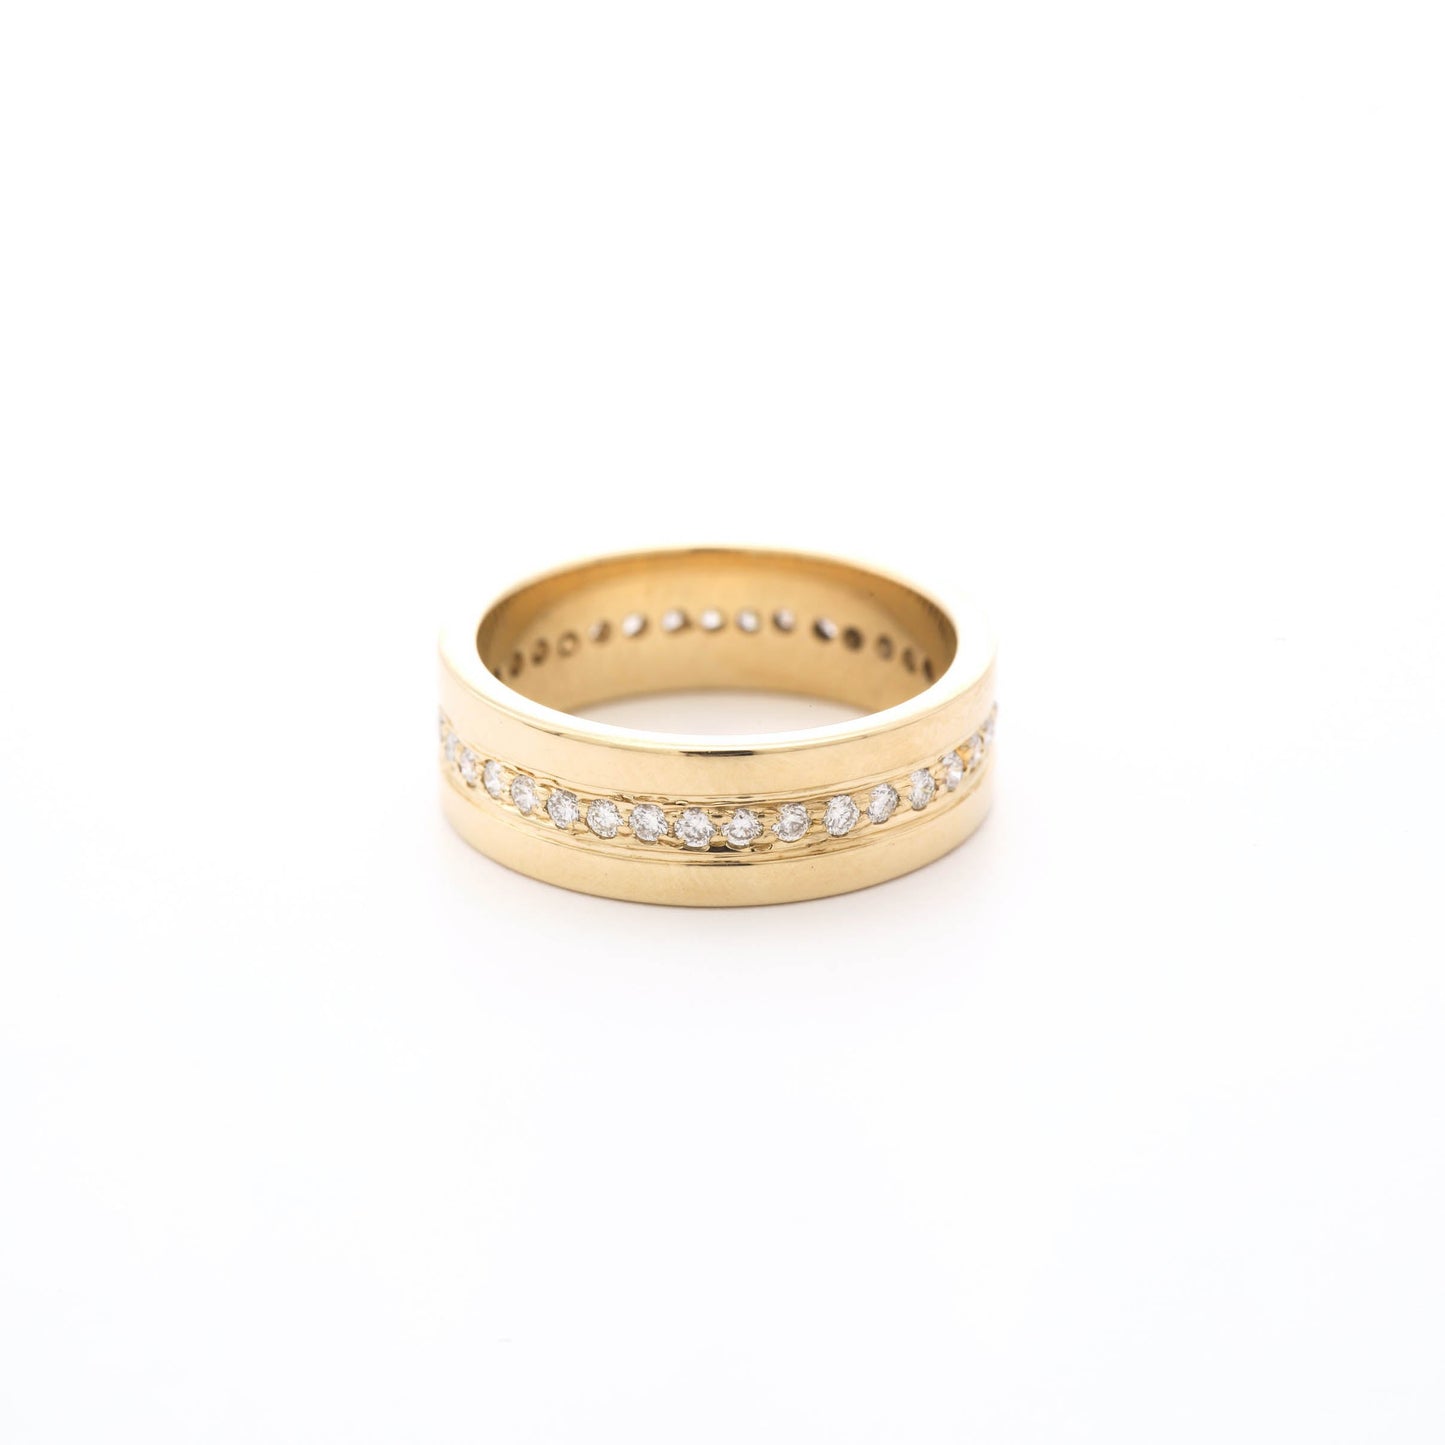 The Neela Gold and Diamond Ring by Rasvihar